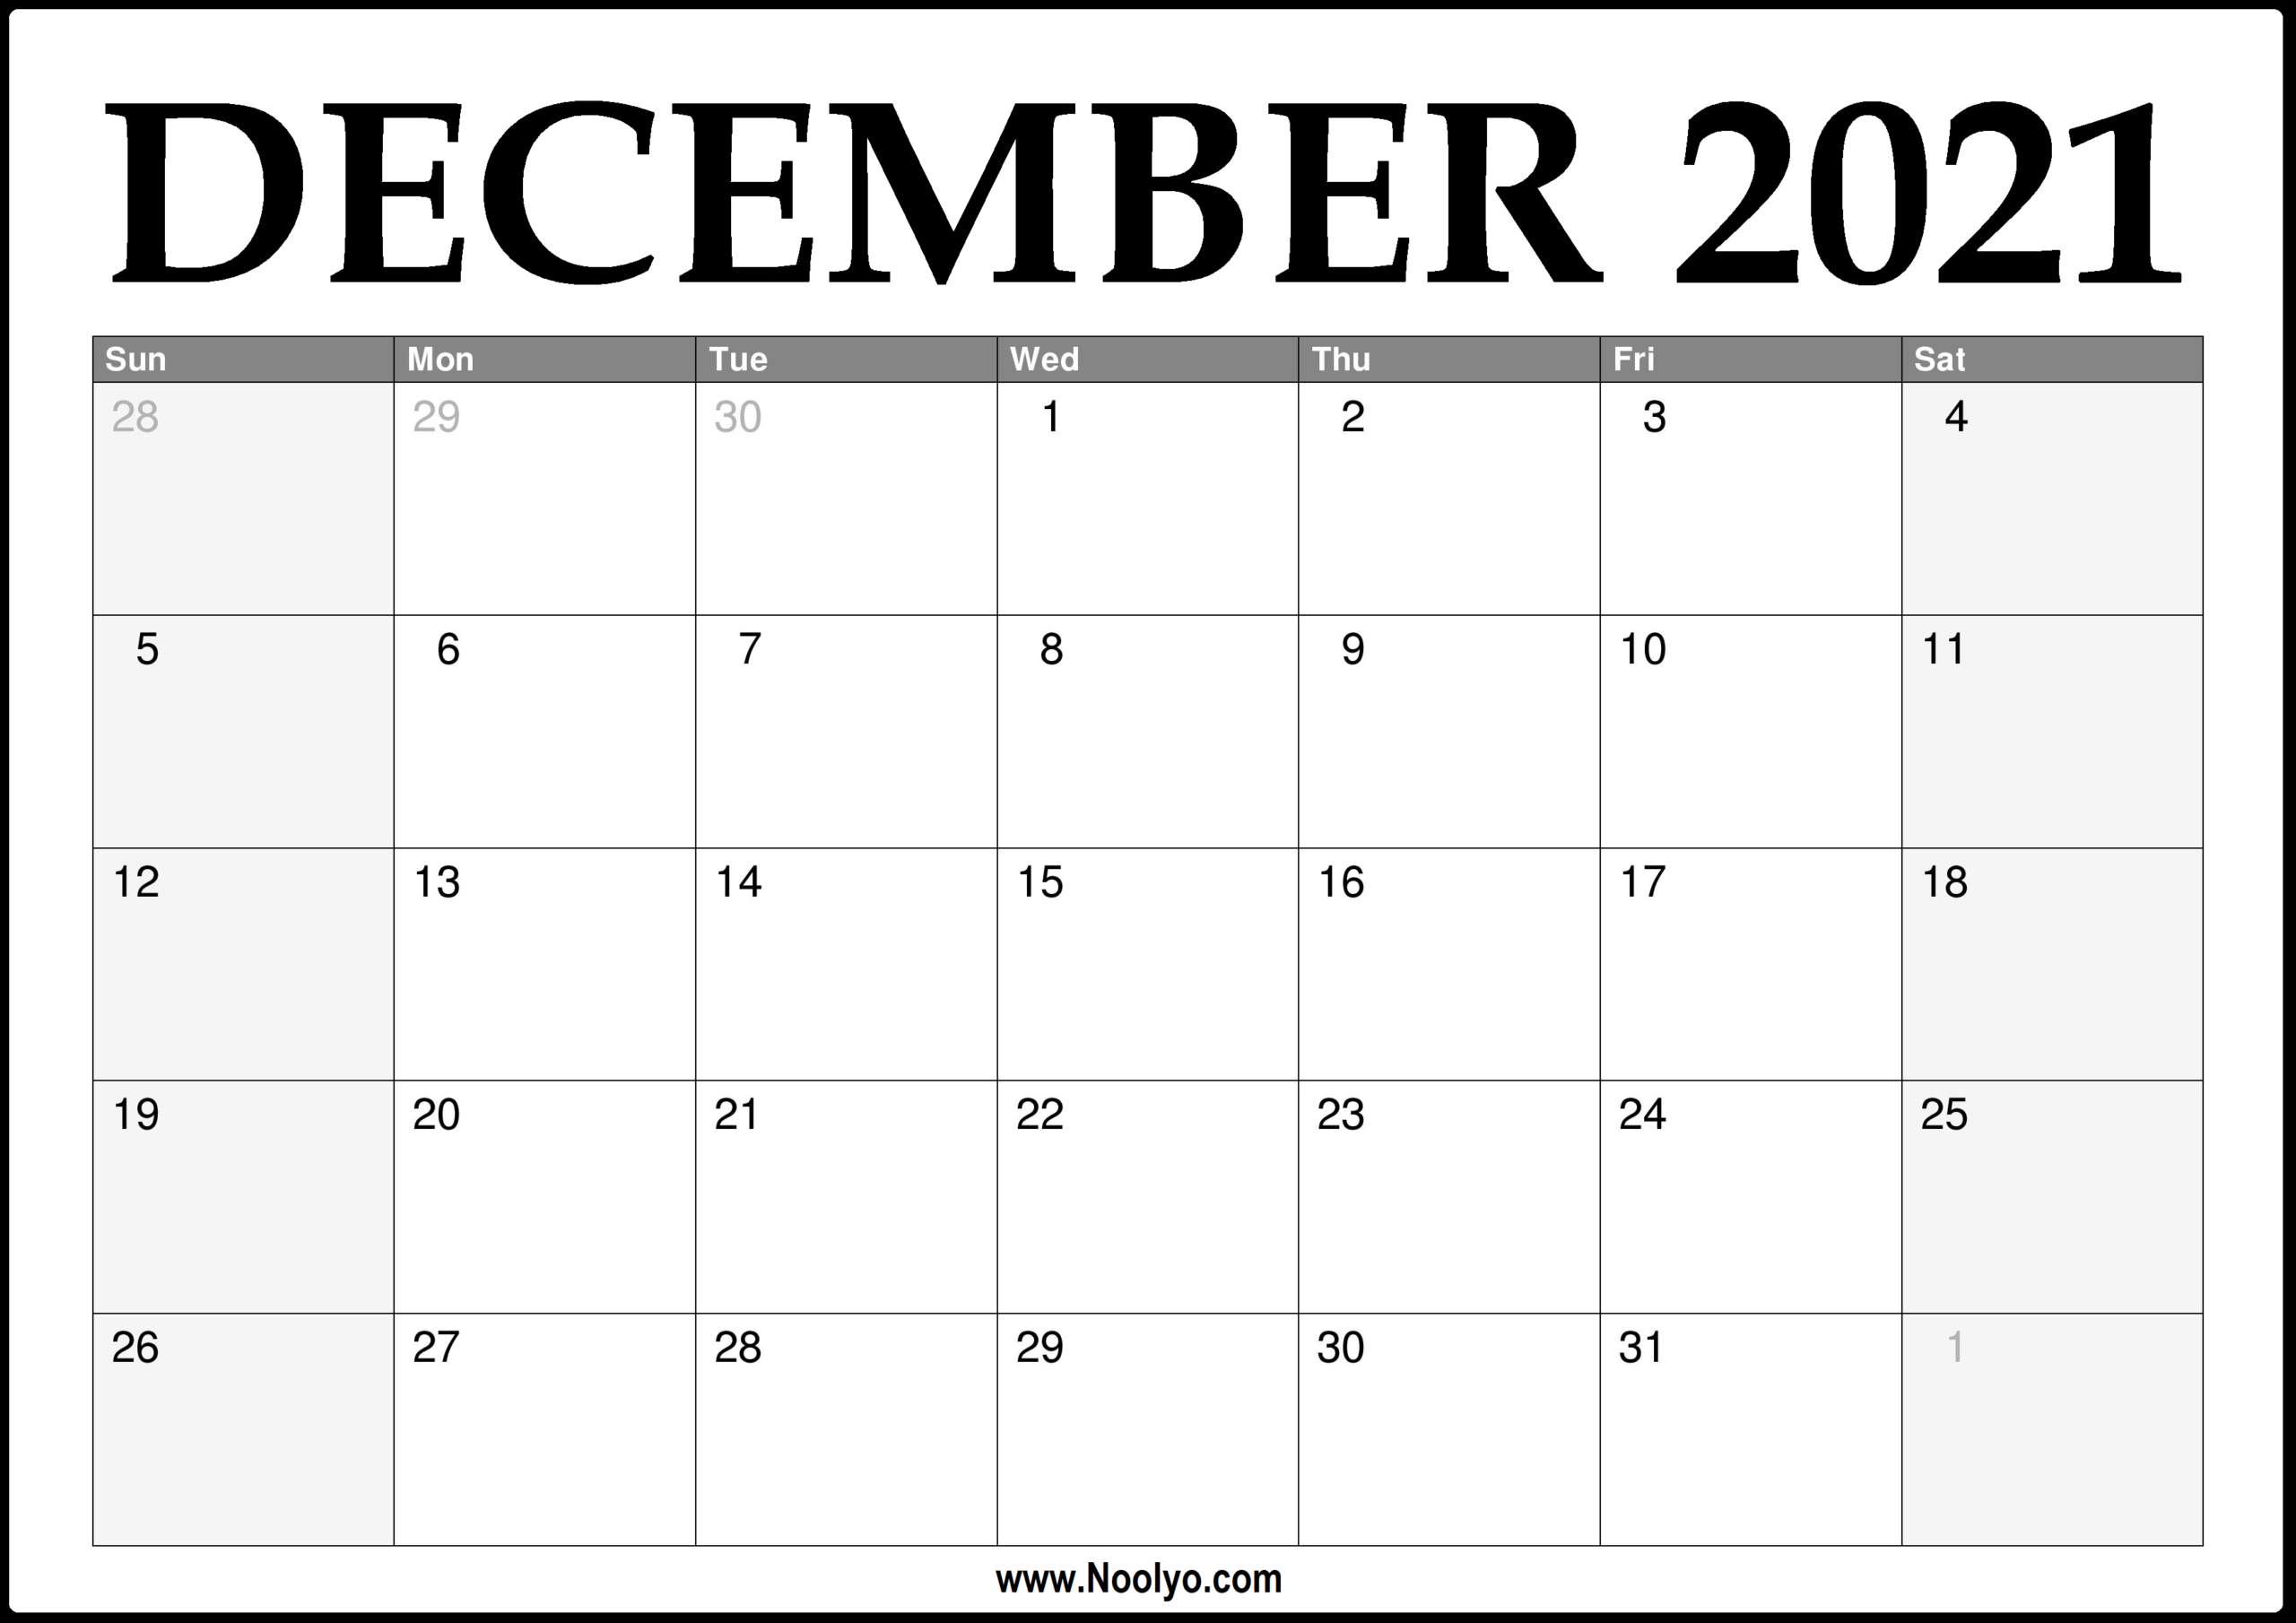 2021 December Calendar Printable - Download Free - Noolyo